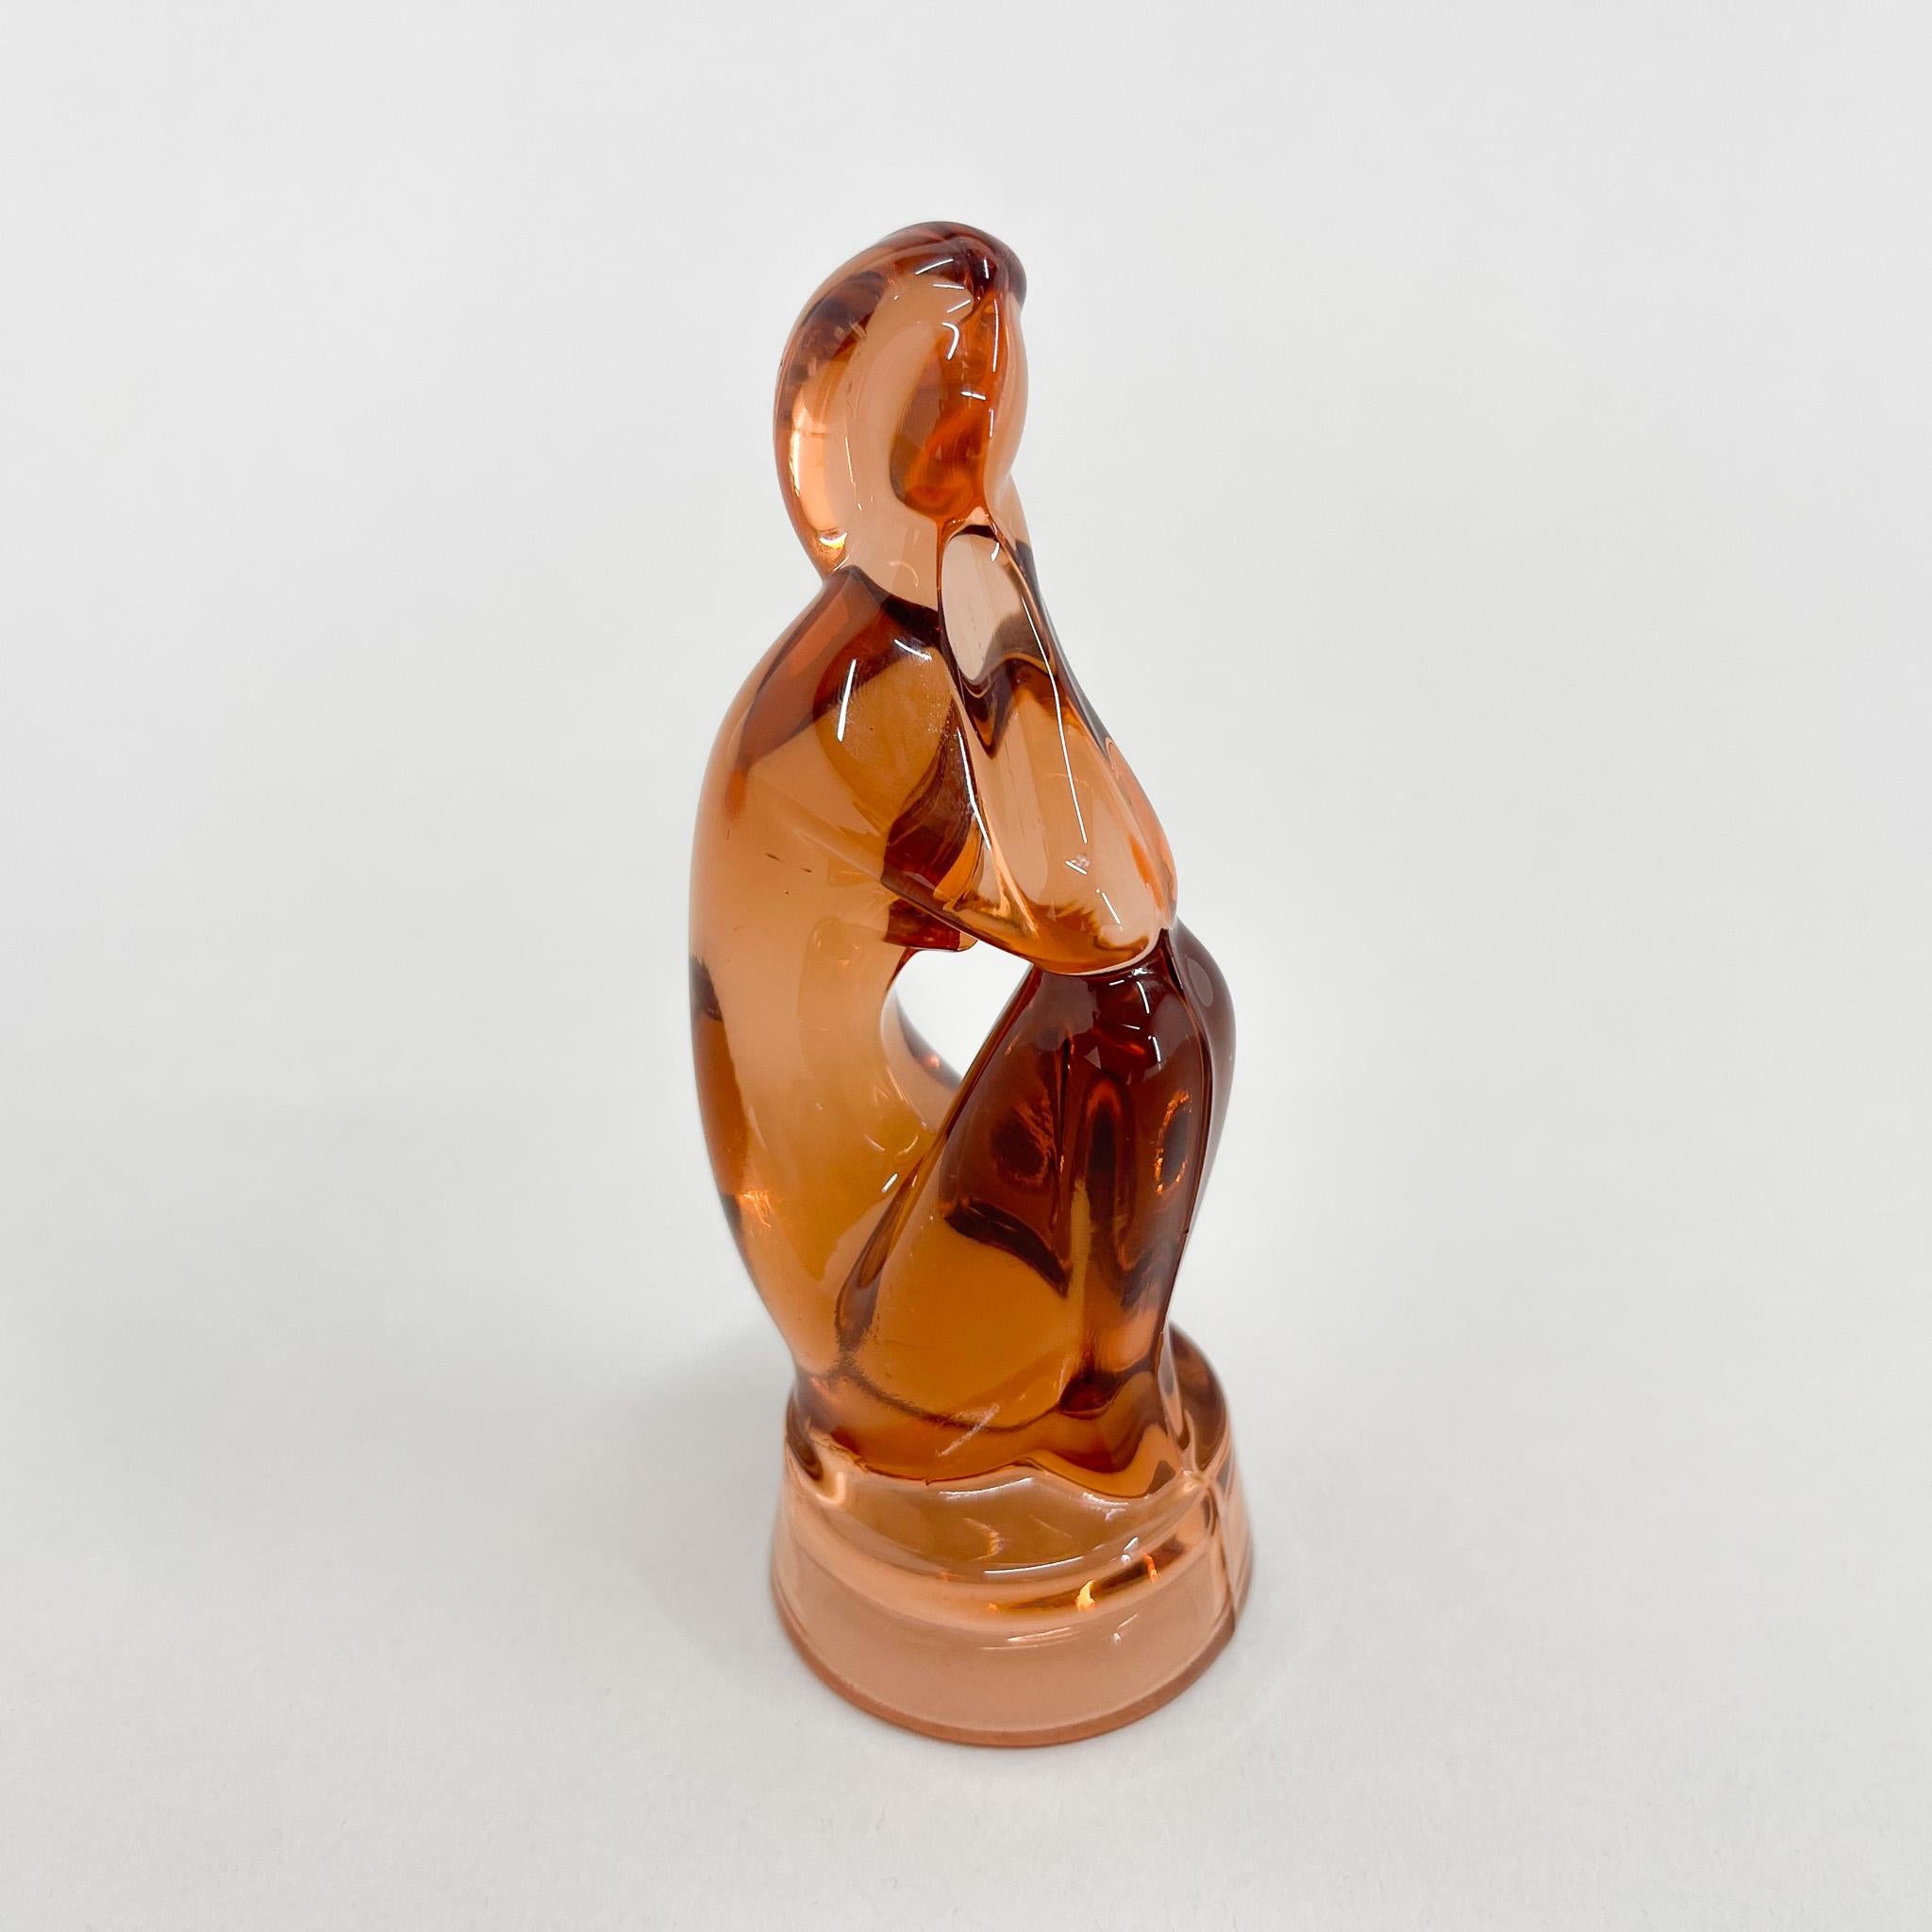 Czech Mid-century Glass Sculpture by Jitka Forejtova for Rudolfova Hut, 1950's For Sale